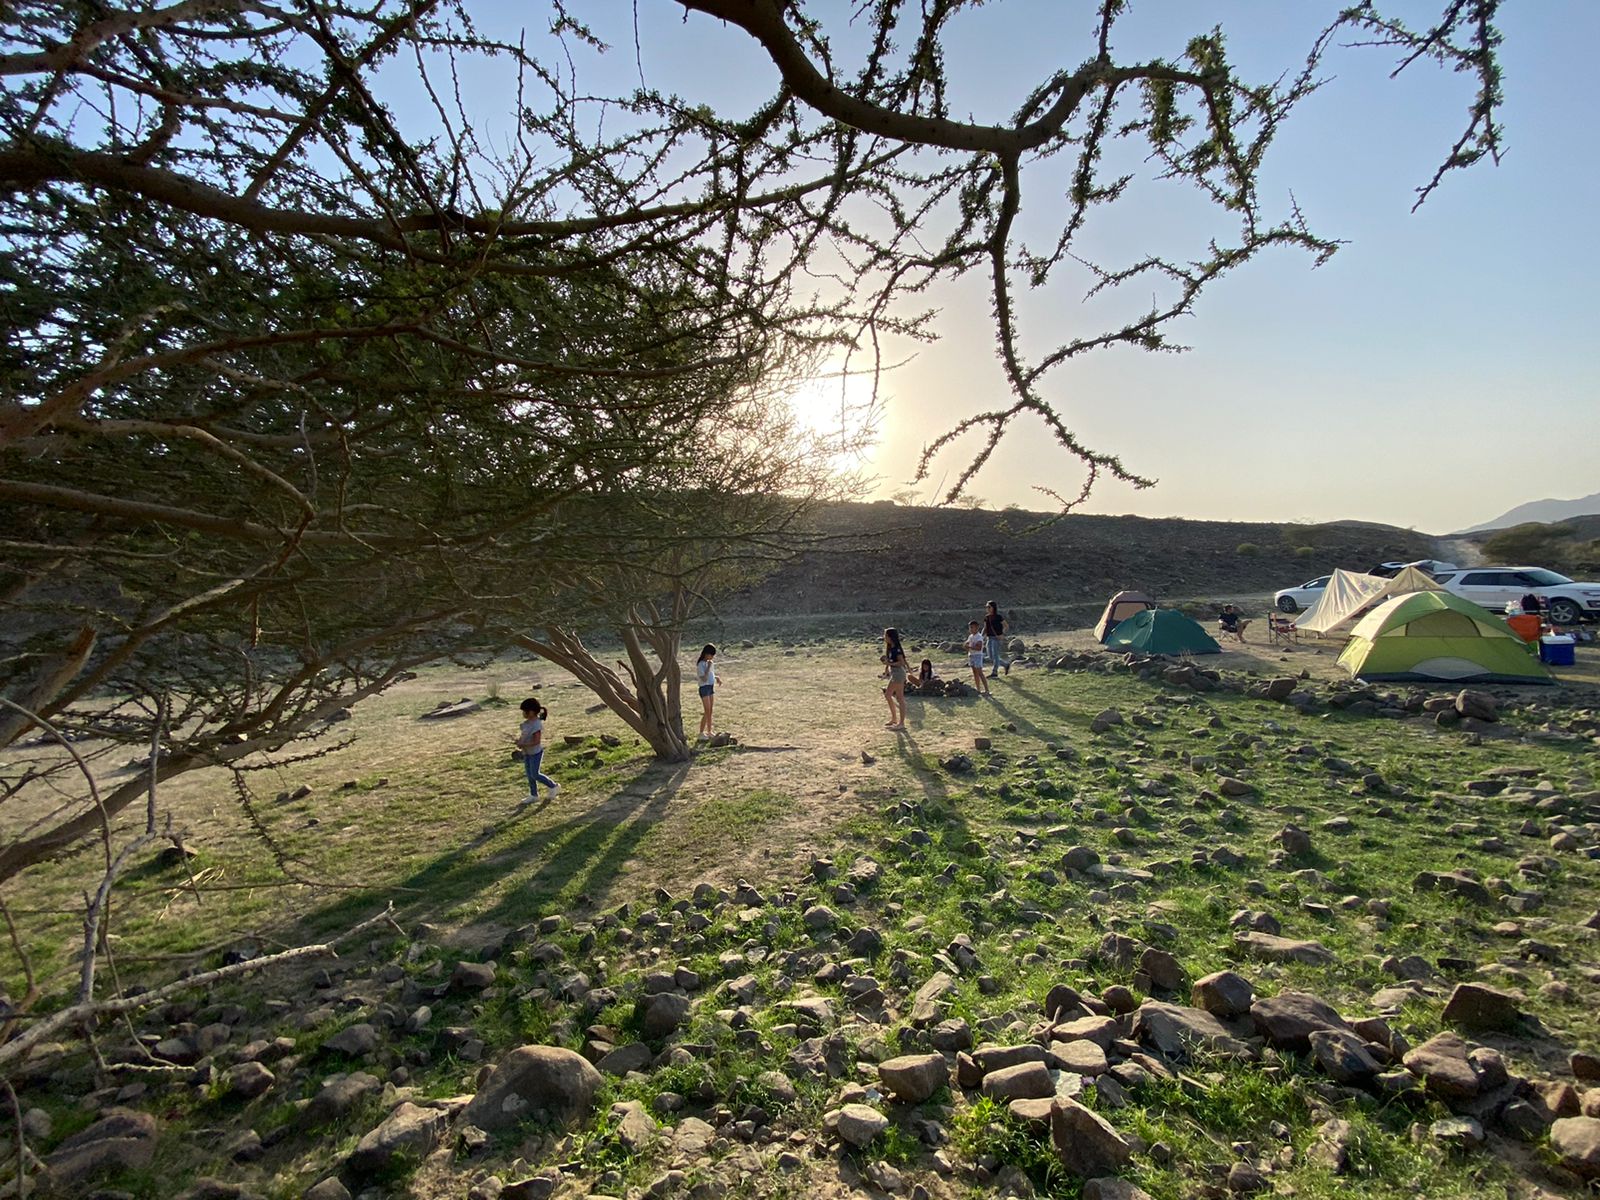 Camping among greeneries in UAE